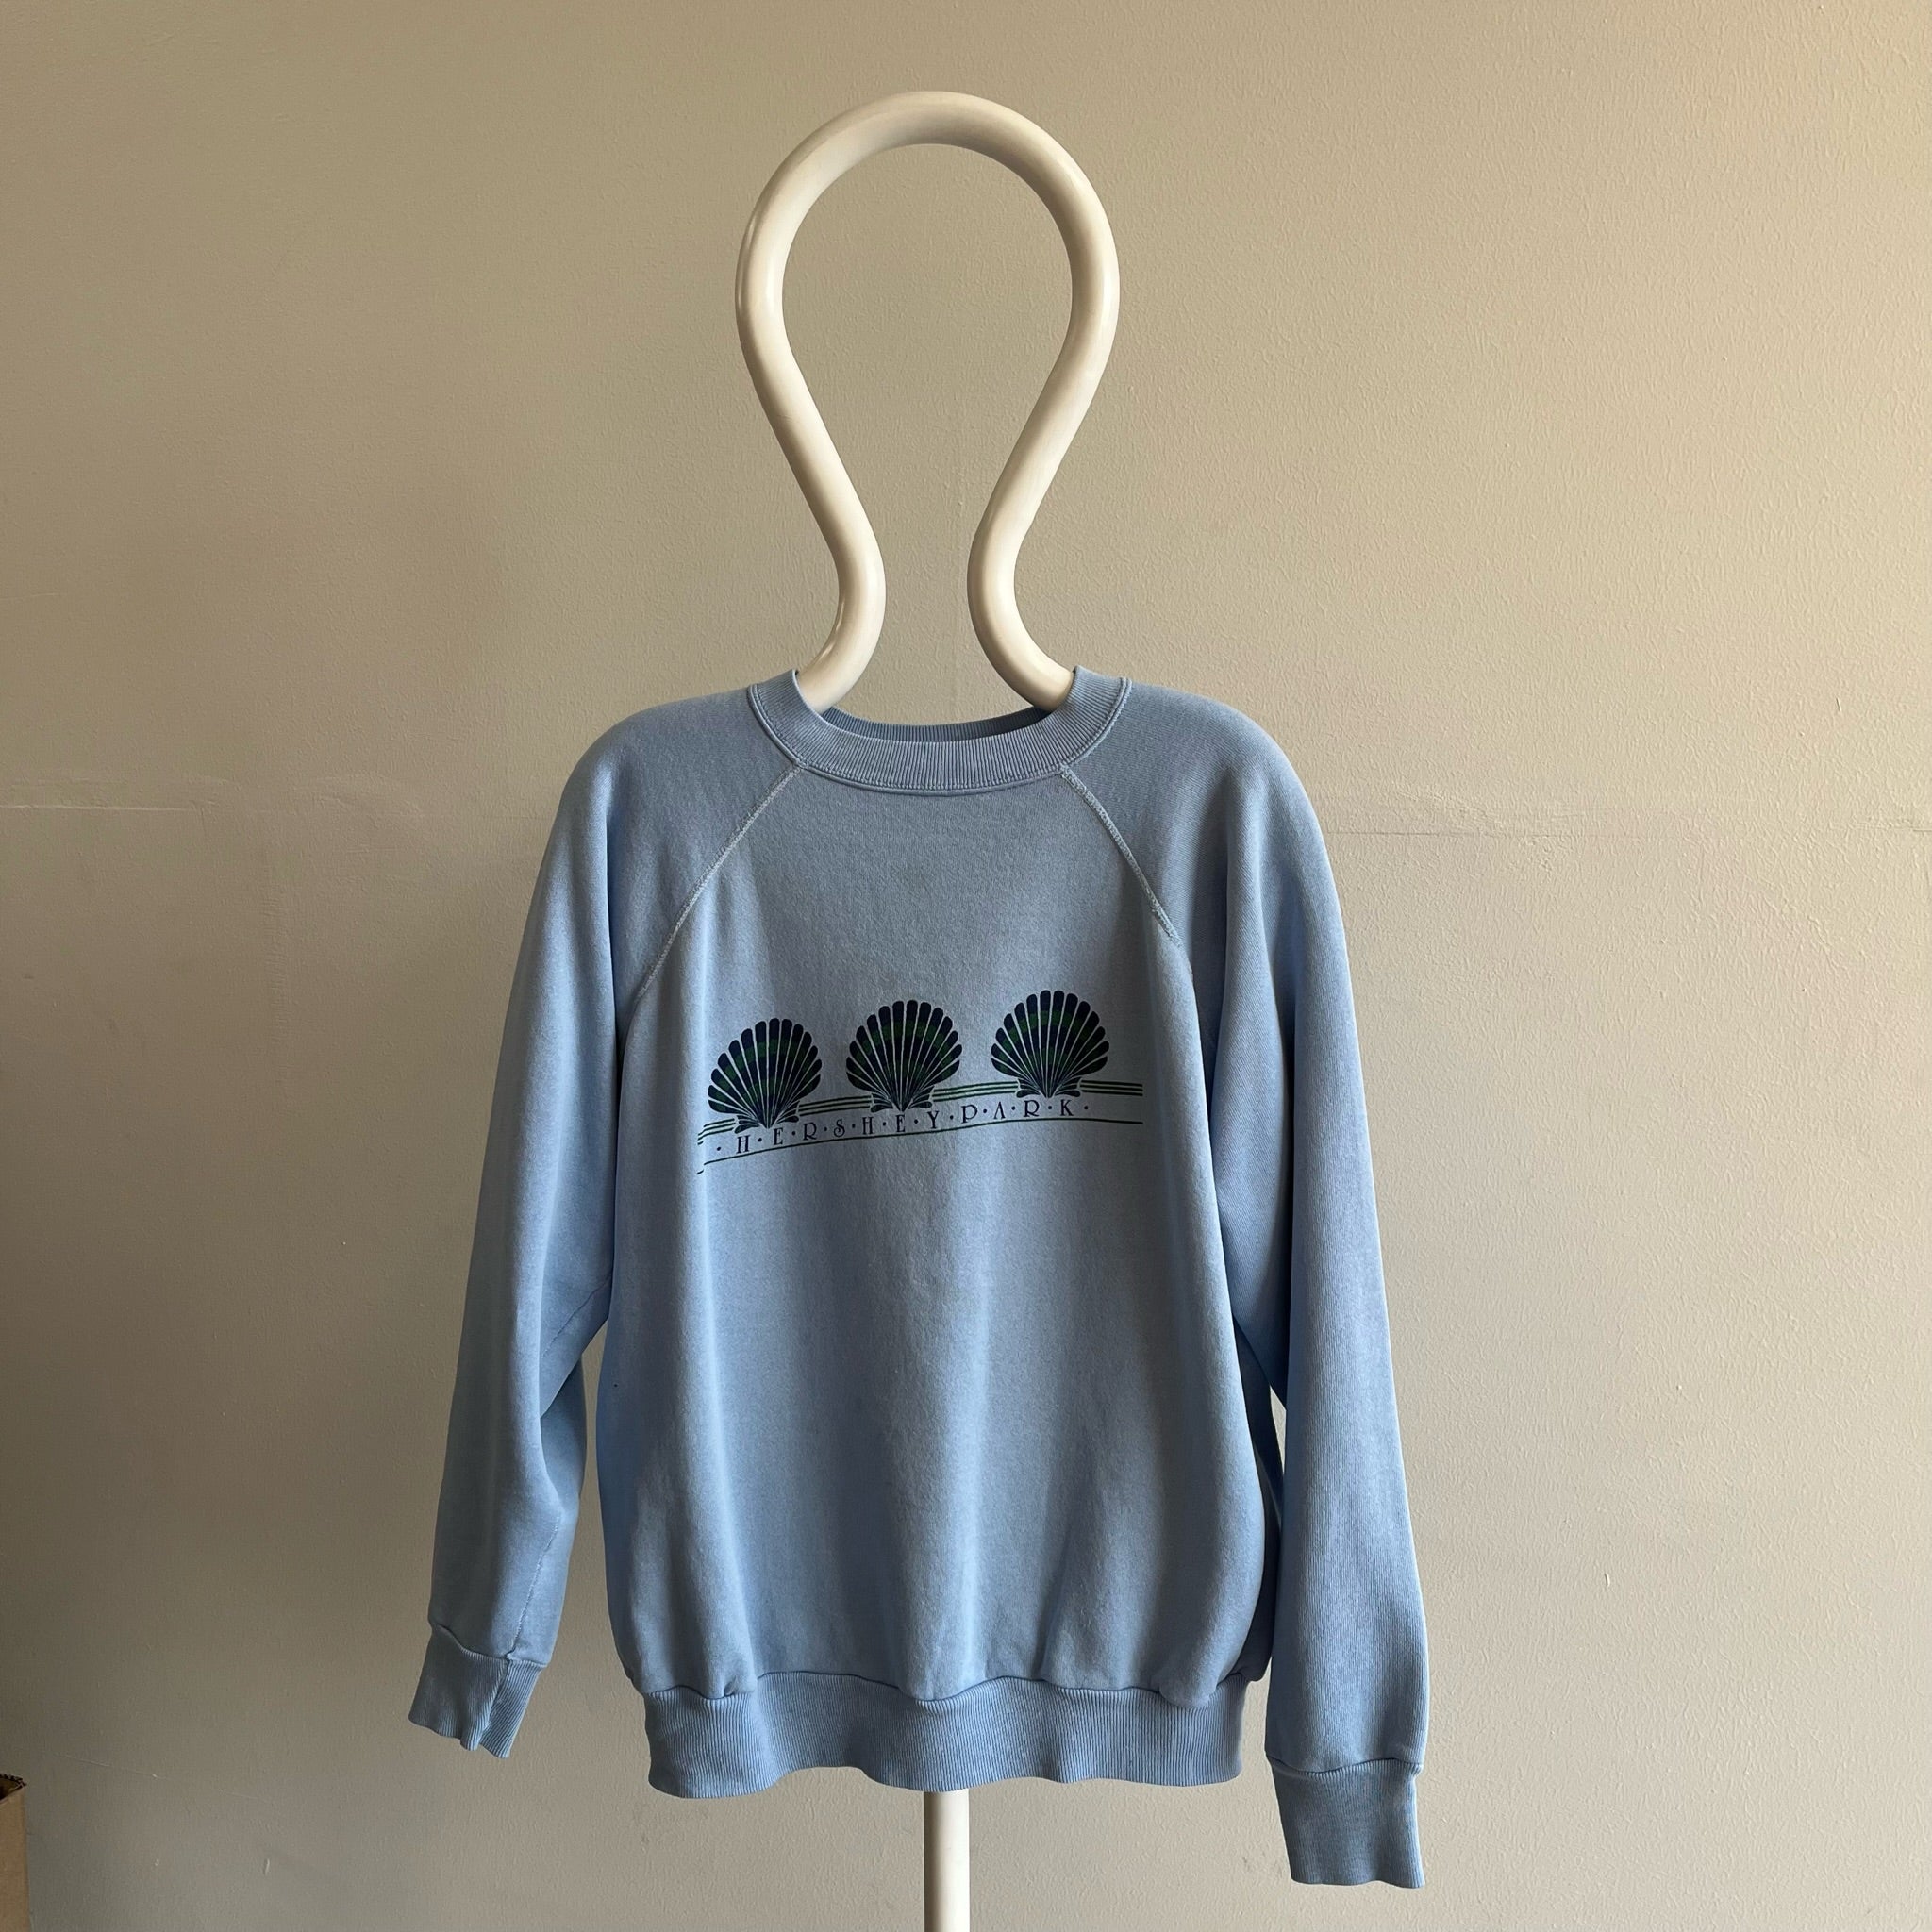 1980s Hershey Park Sweatshirt by Velva Sheen